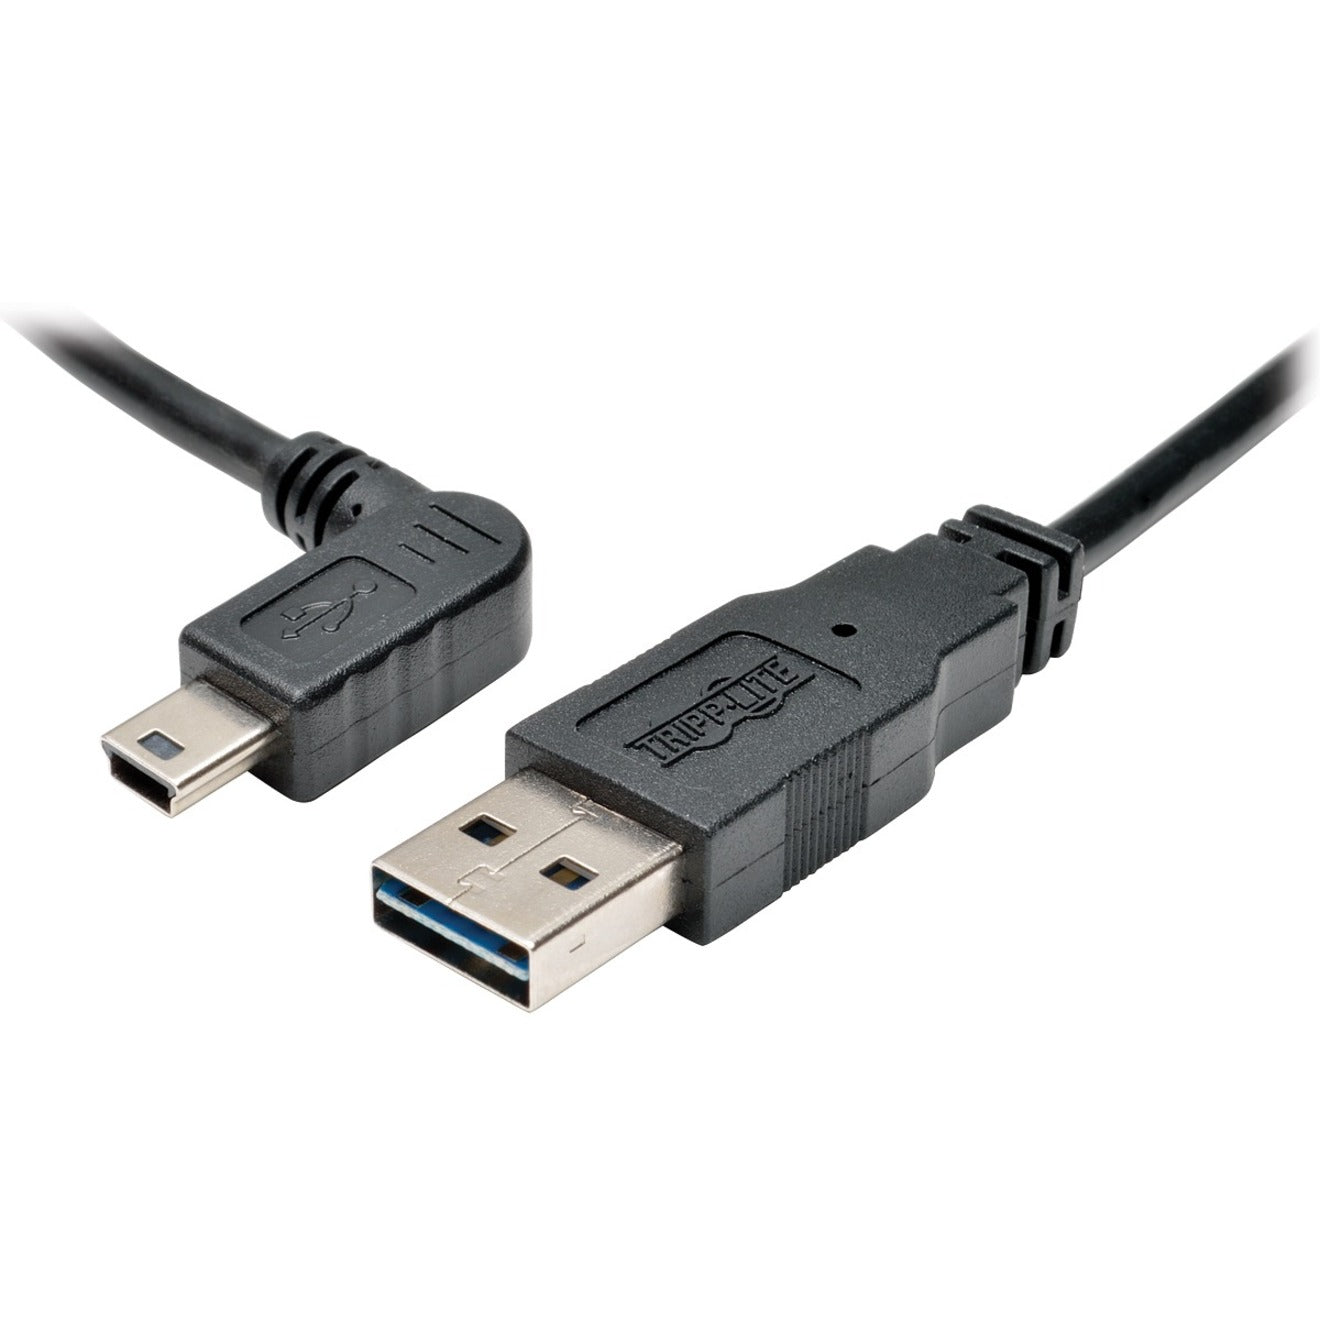 Tripp Lite UR030-006-LAB USB Data Transfer Cable, 6 ft, Left-Angle Mini USB 2.0 Type B - Male, Reversible